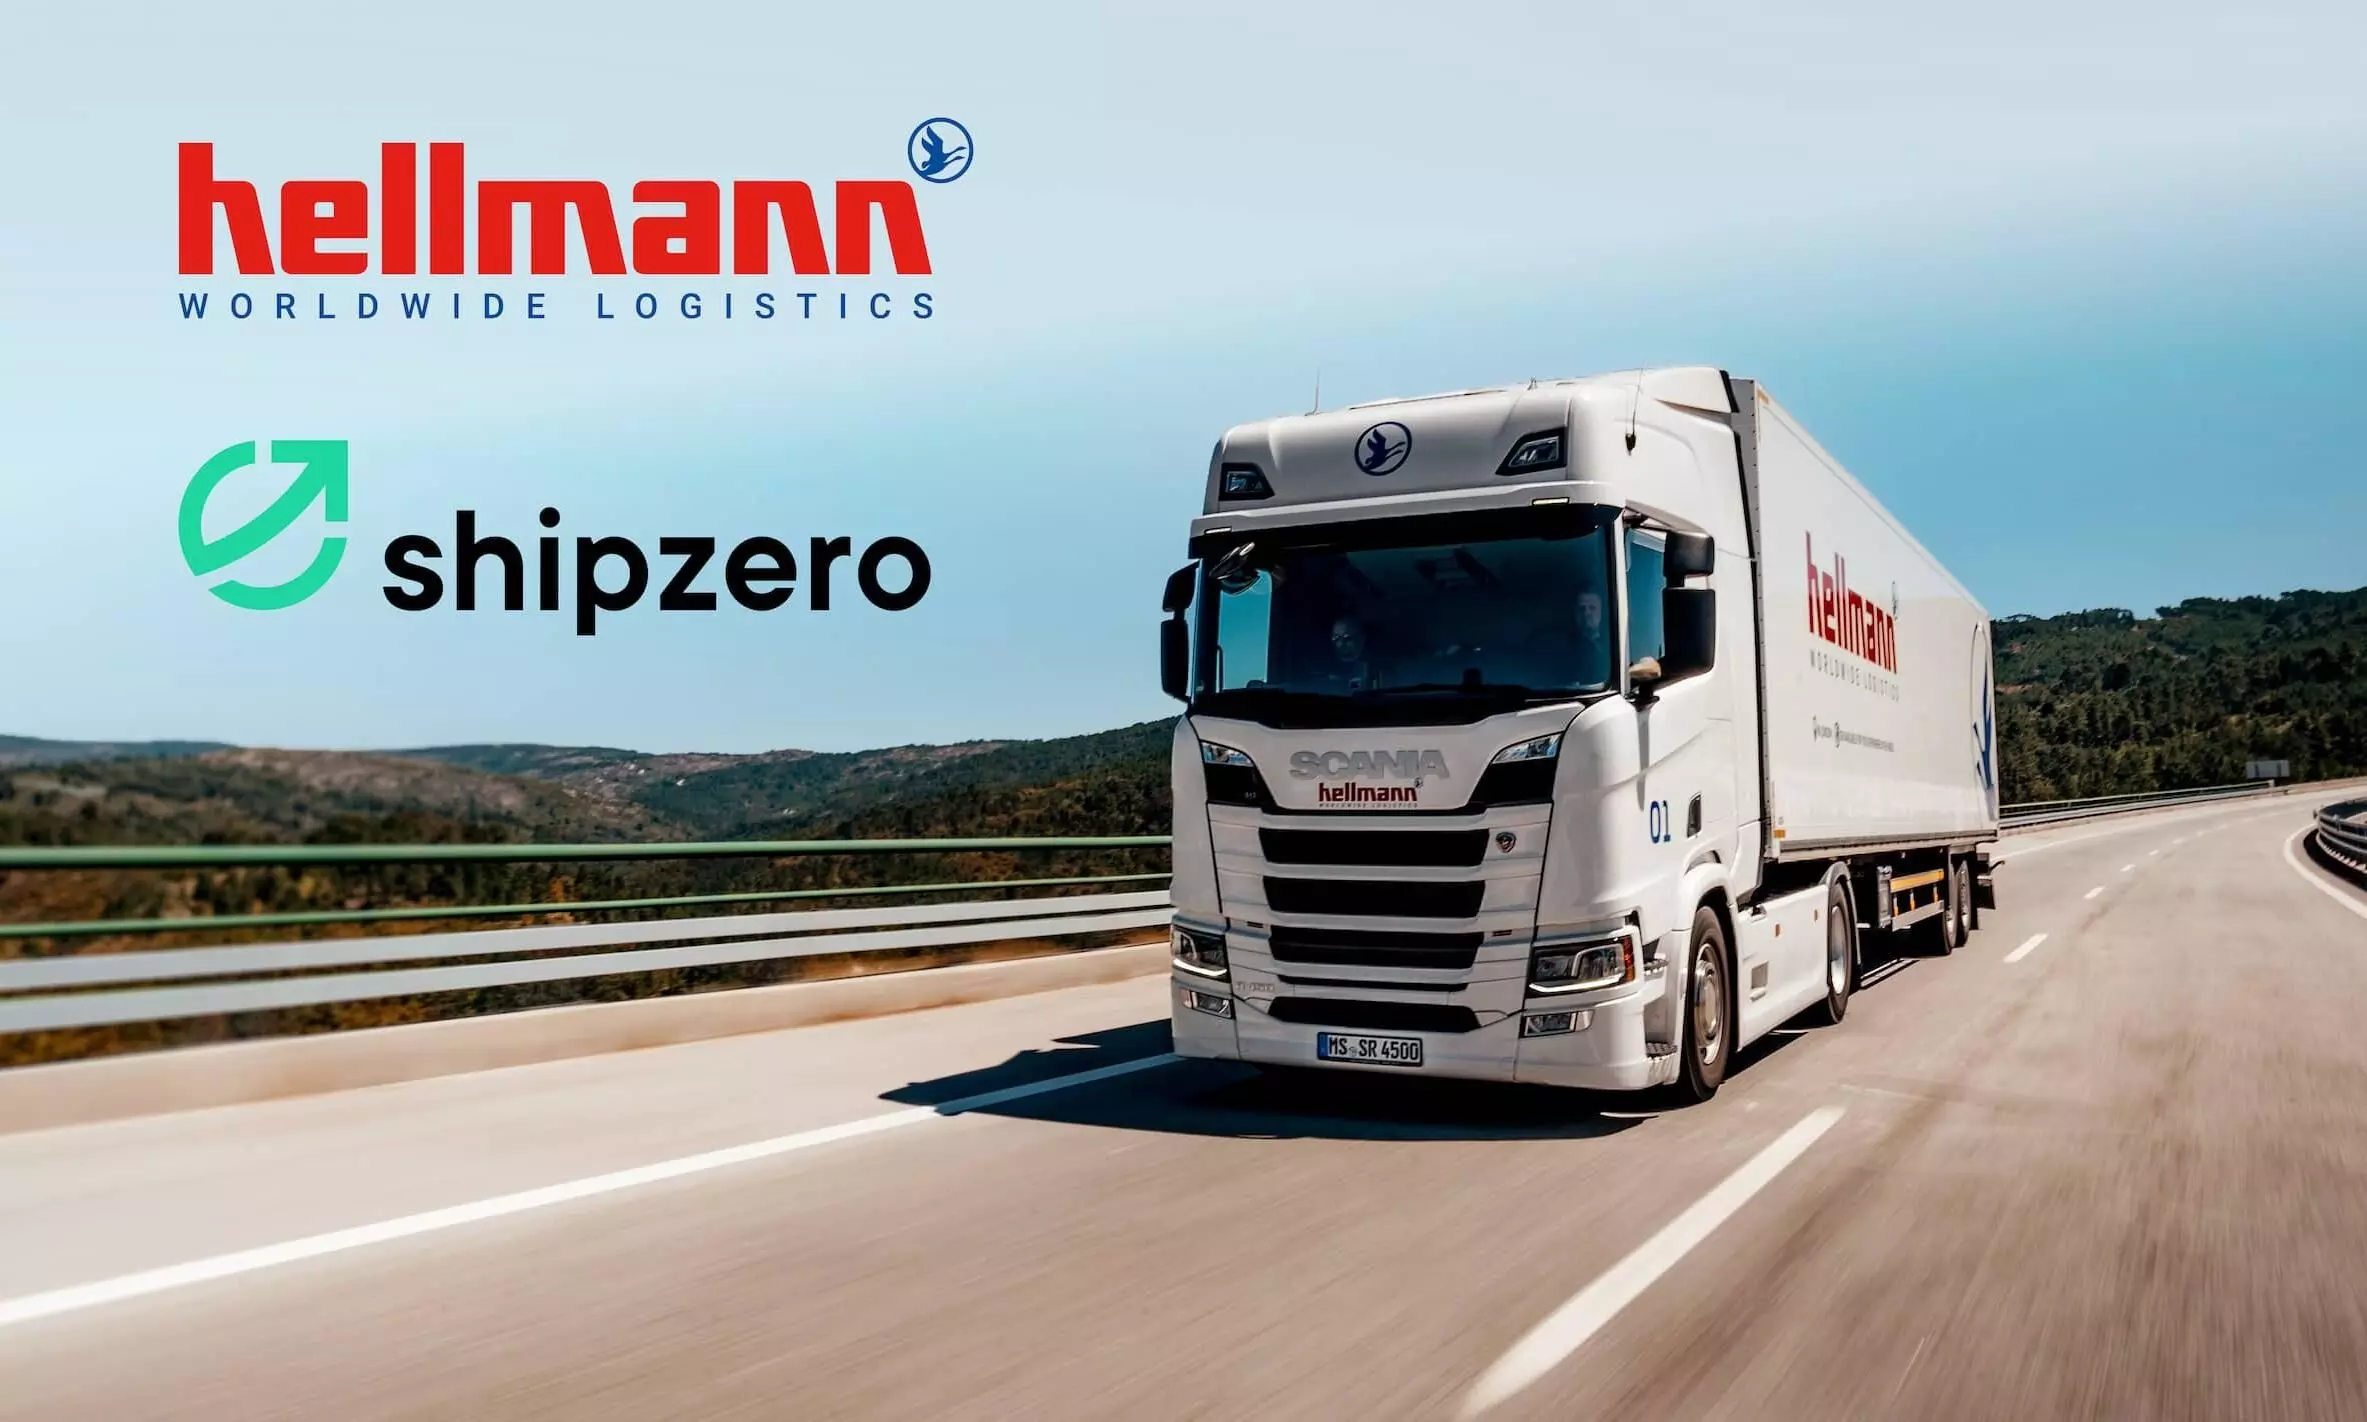 Hellmann, shipzero sign deal for sustainable road logistics